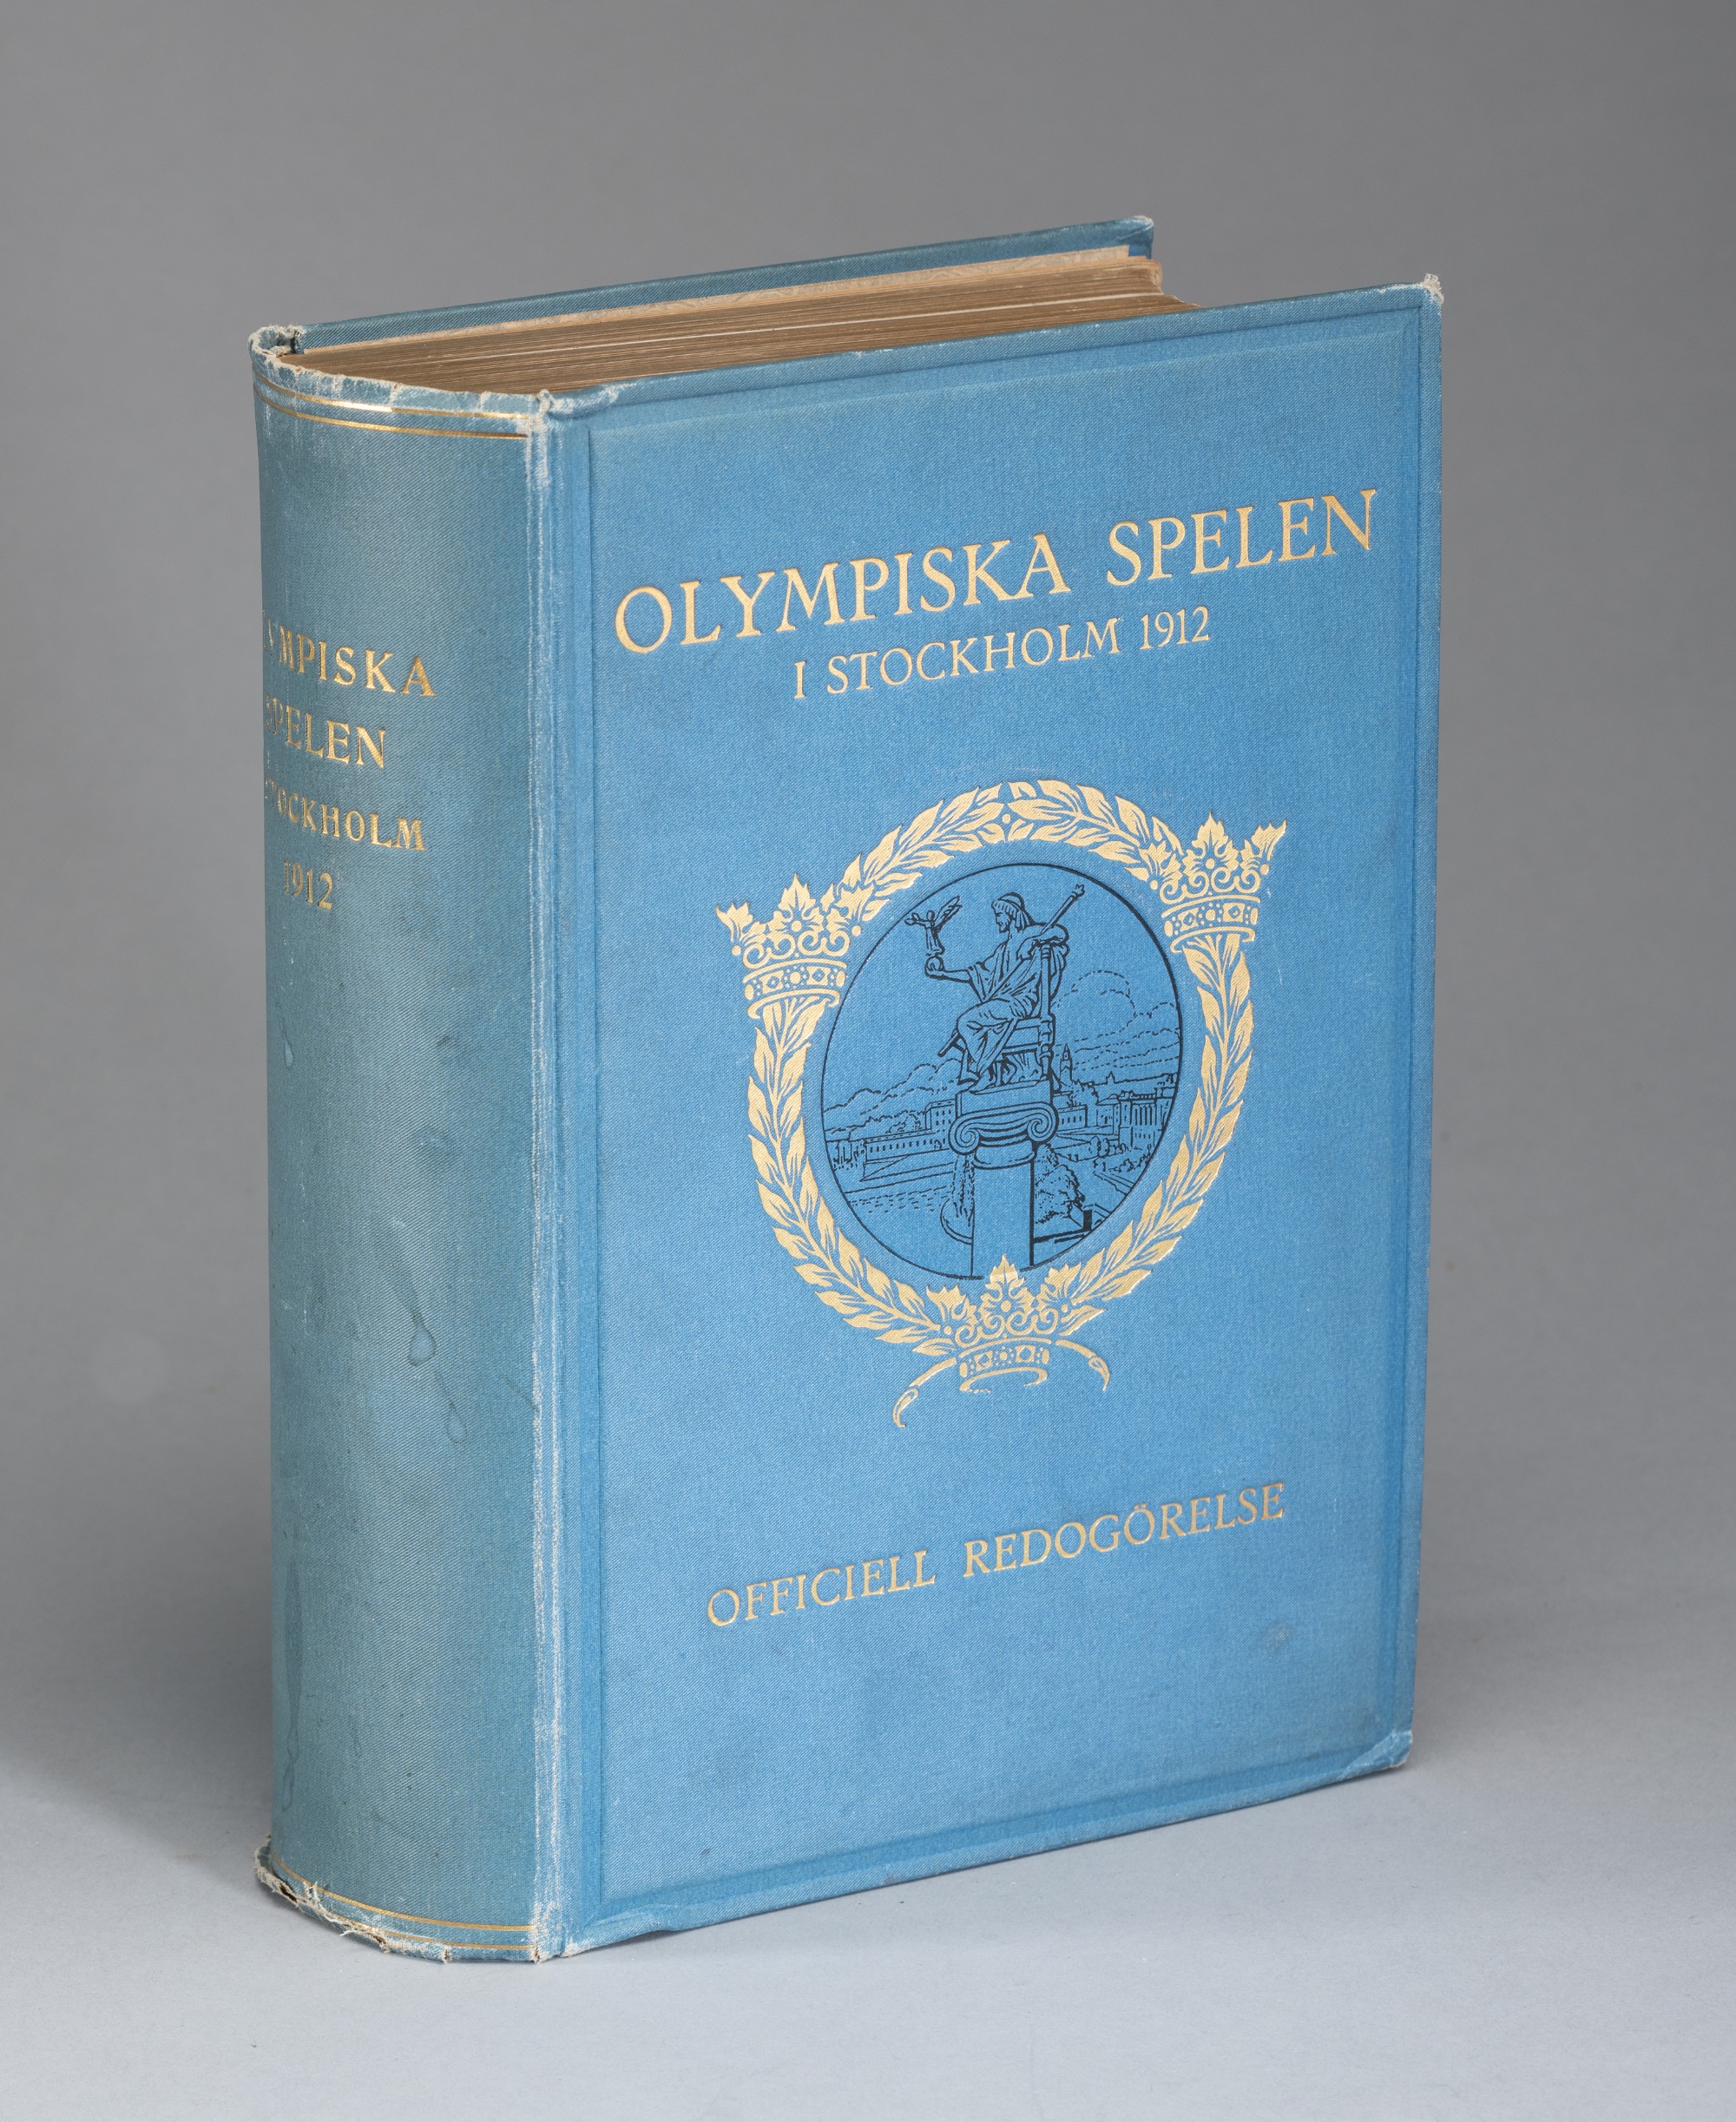 Stockholm 1912 Olympic Games memorabilia